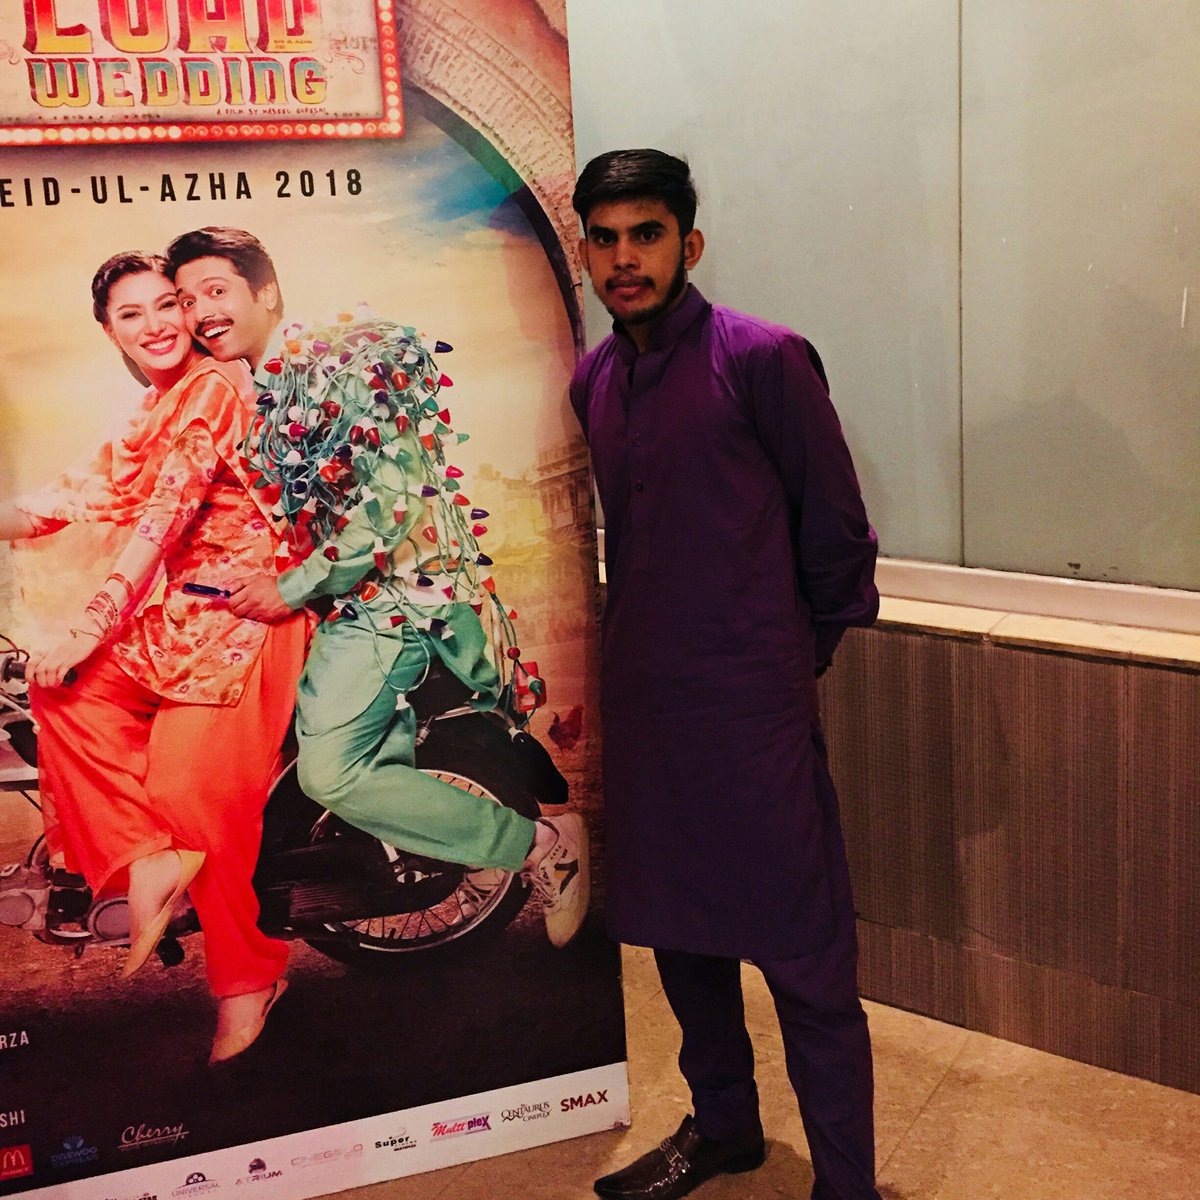 #NewProfilePic #LoadWedding  #EidMubarak #FahadMustafa  #MehwishHayat #hassanali #NabeelQureshi #FizzaAliMeerza 
#LoadWeddingReview #MoviePass #movieonline #movies #PakistaniCinema #PakistaniFilms #PakistanZindabad #likexlike #Likeได้เรื่อง